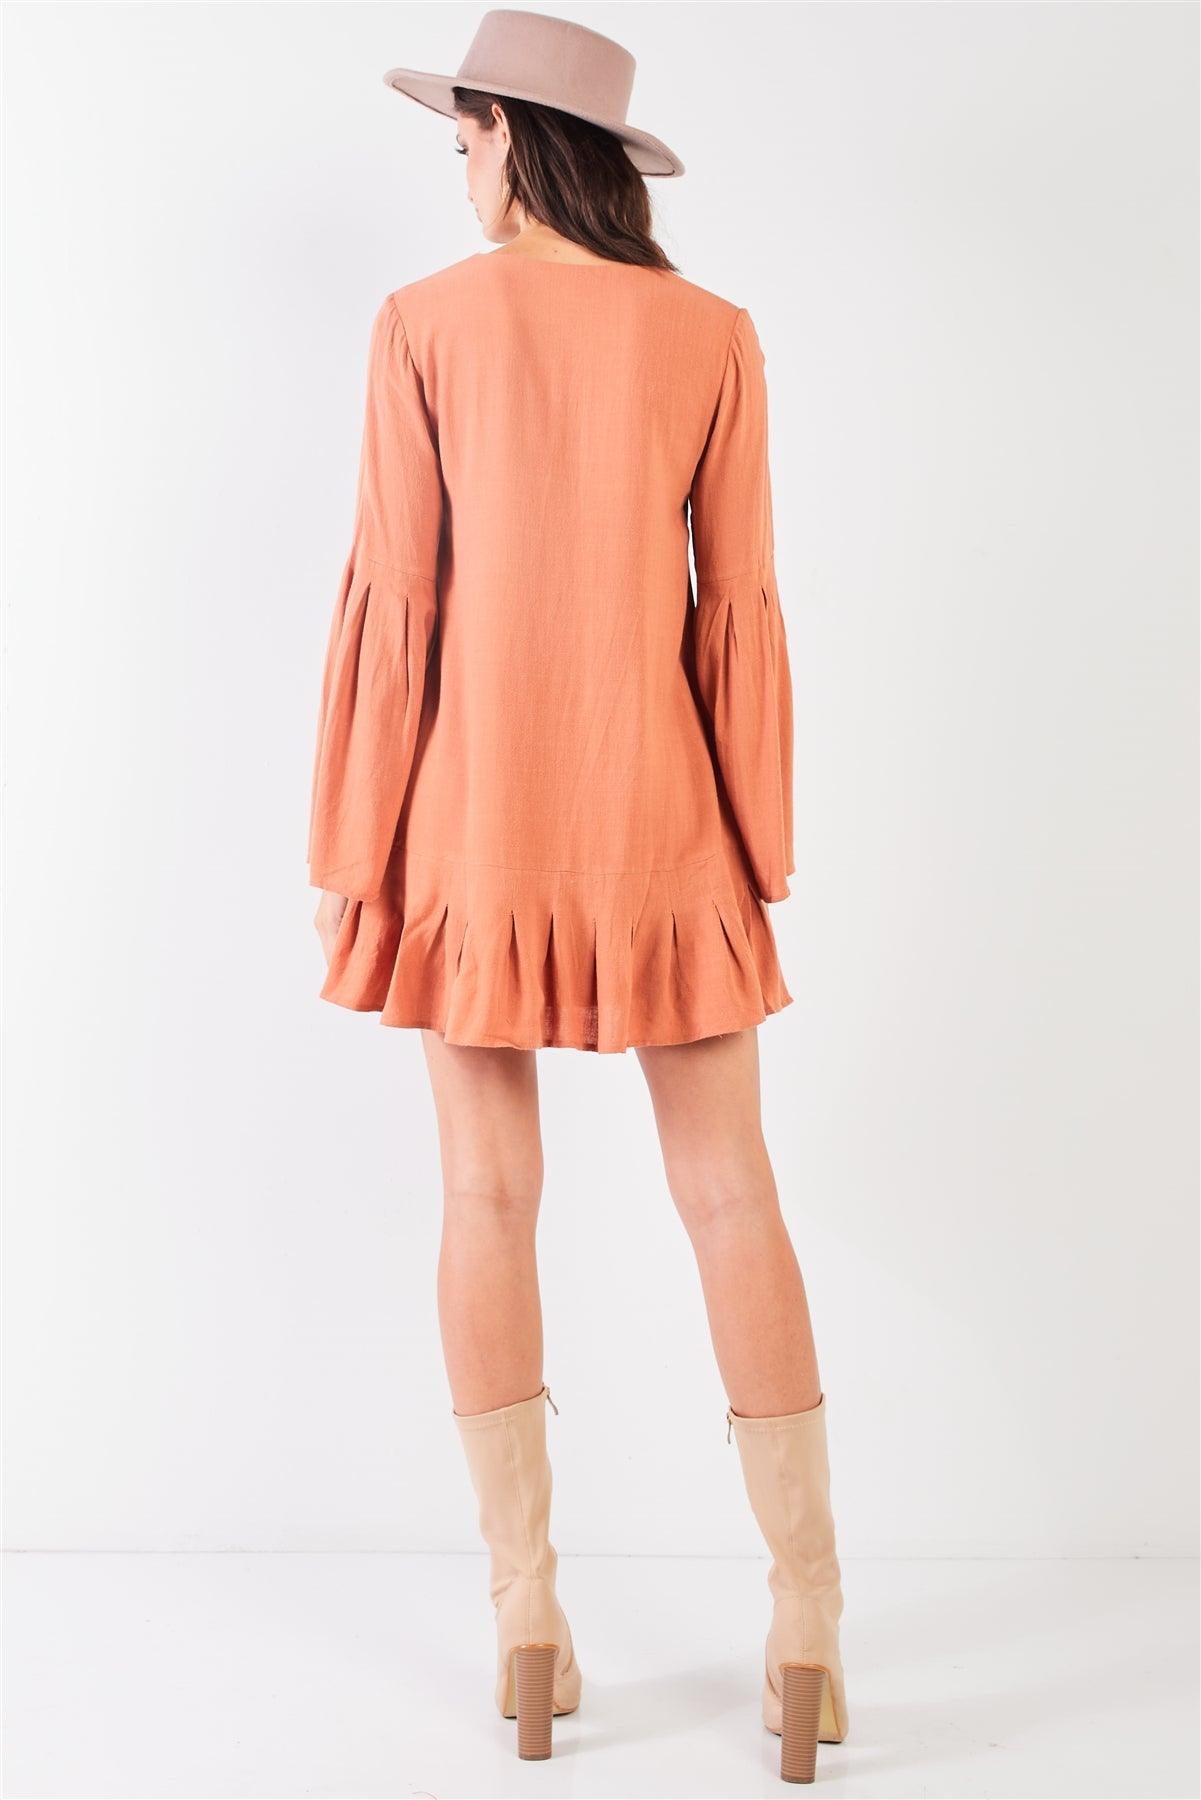 Camel Boho V-Neck Poet Sleeve Pleated Edge Detail Loose Fit Mini Dress /2-2-2